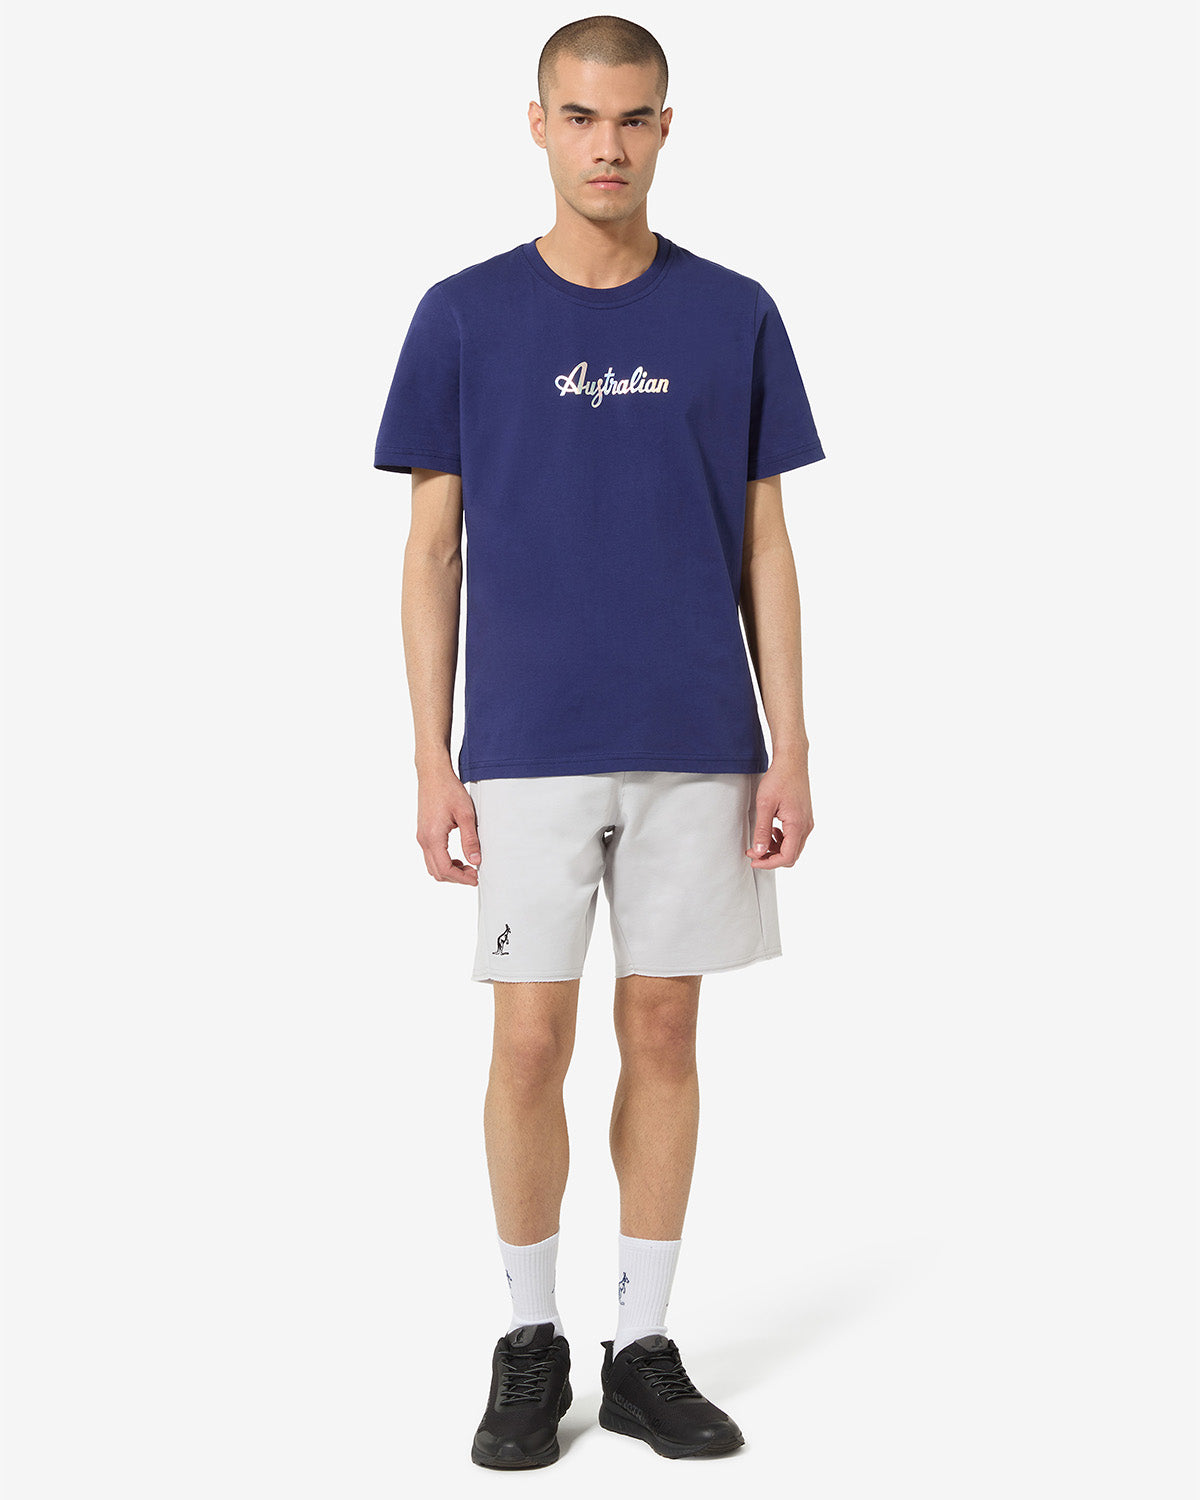 Urban T-Shirts: Australian Sportswear